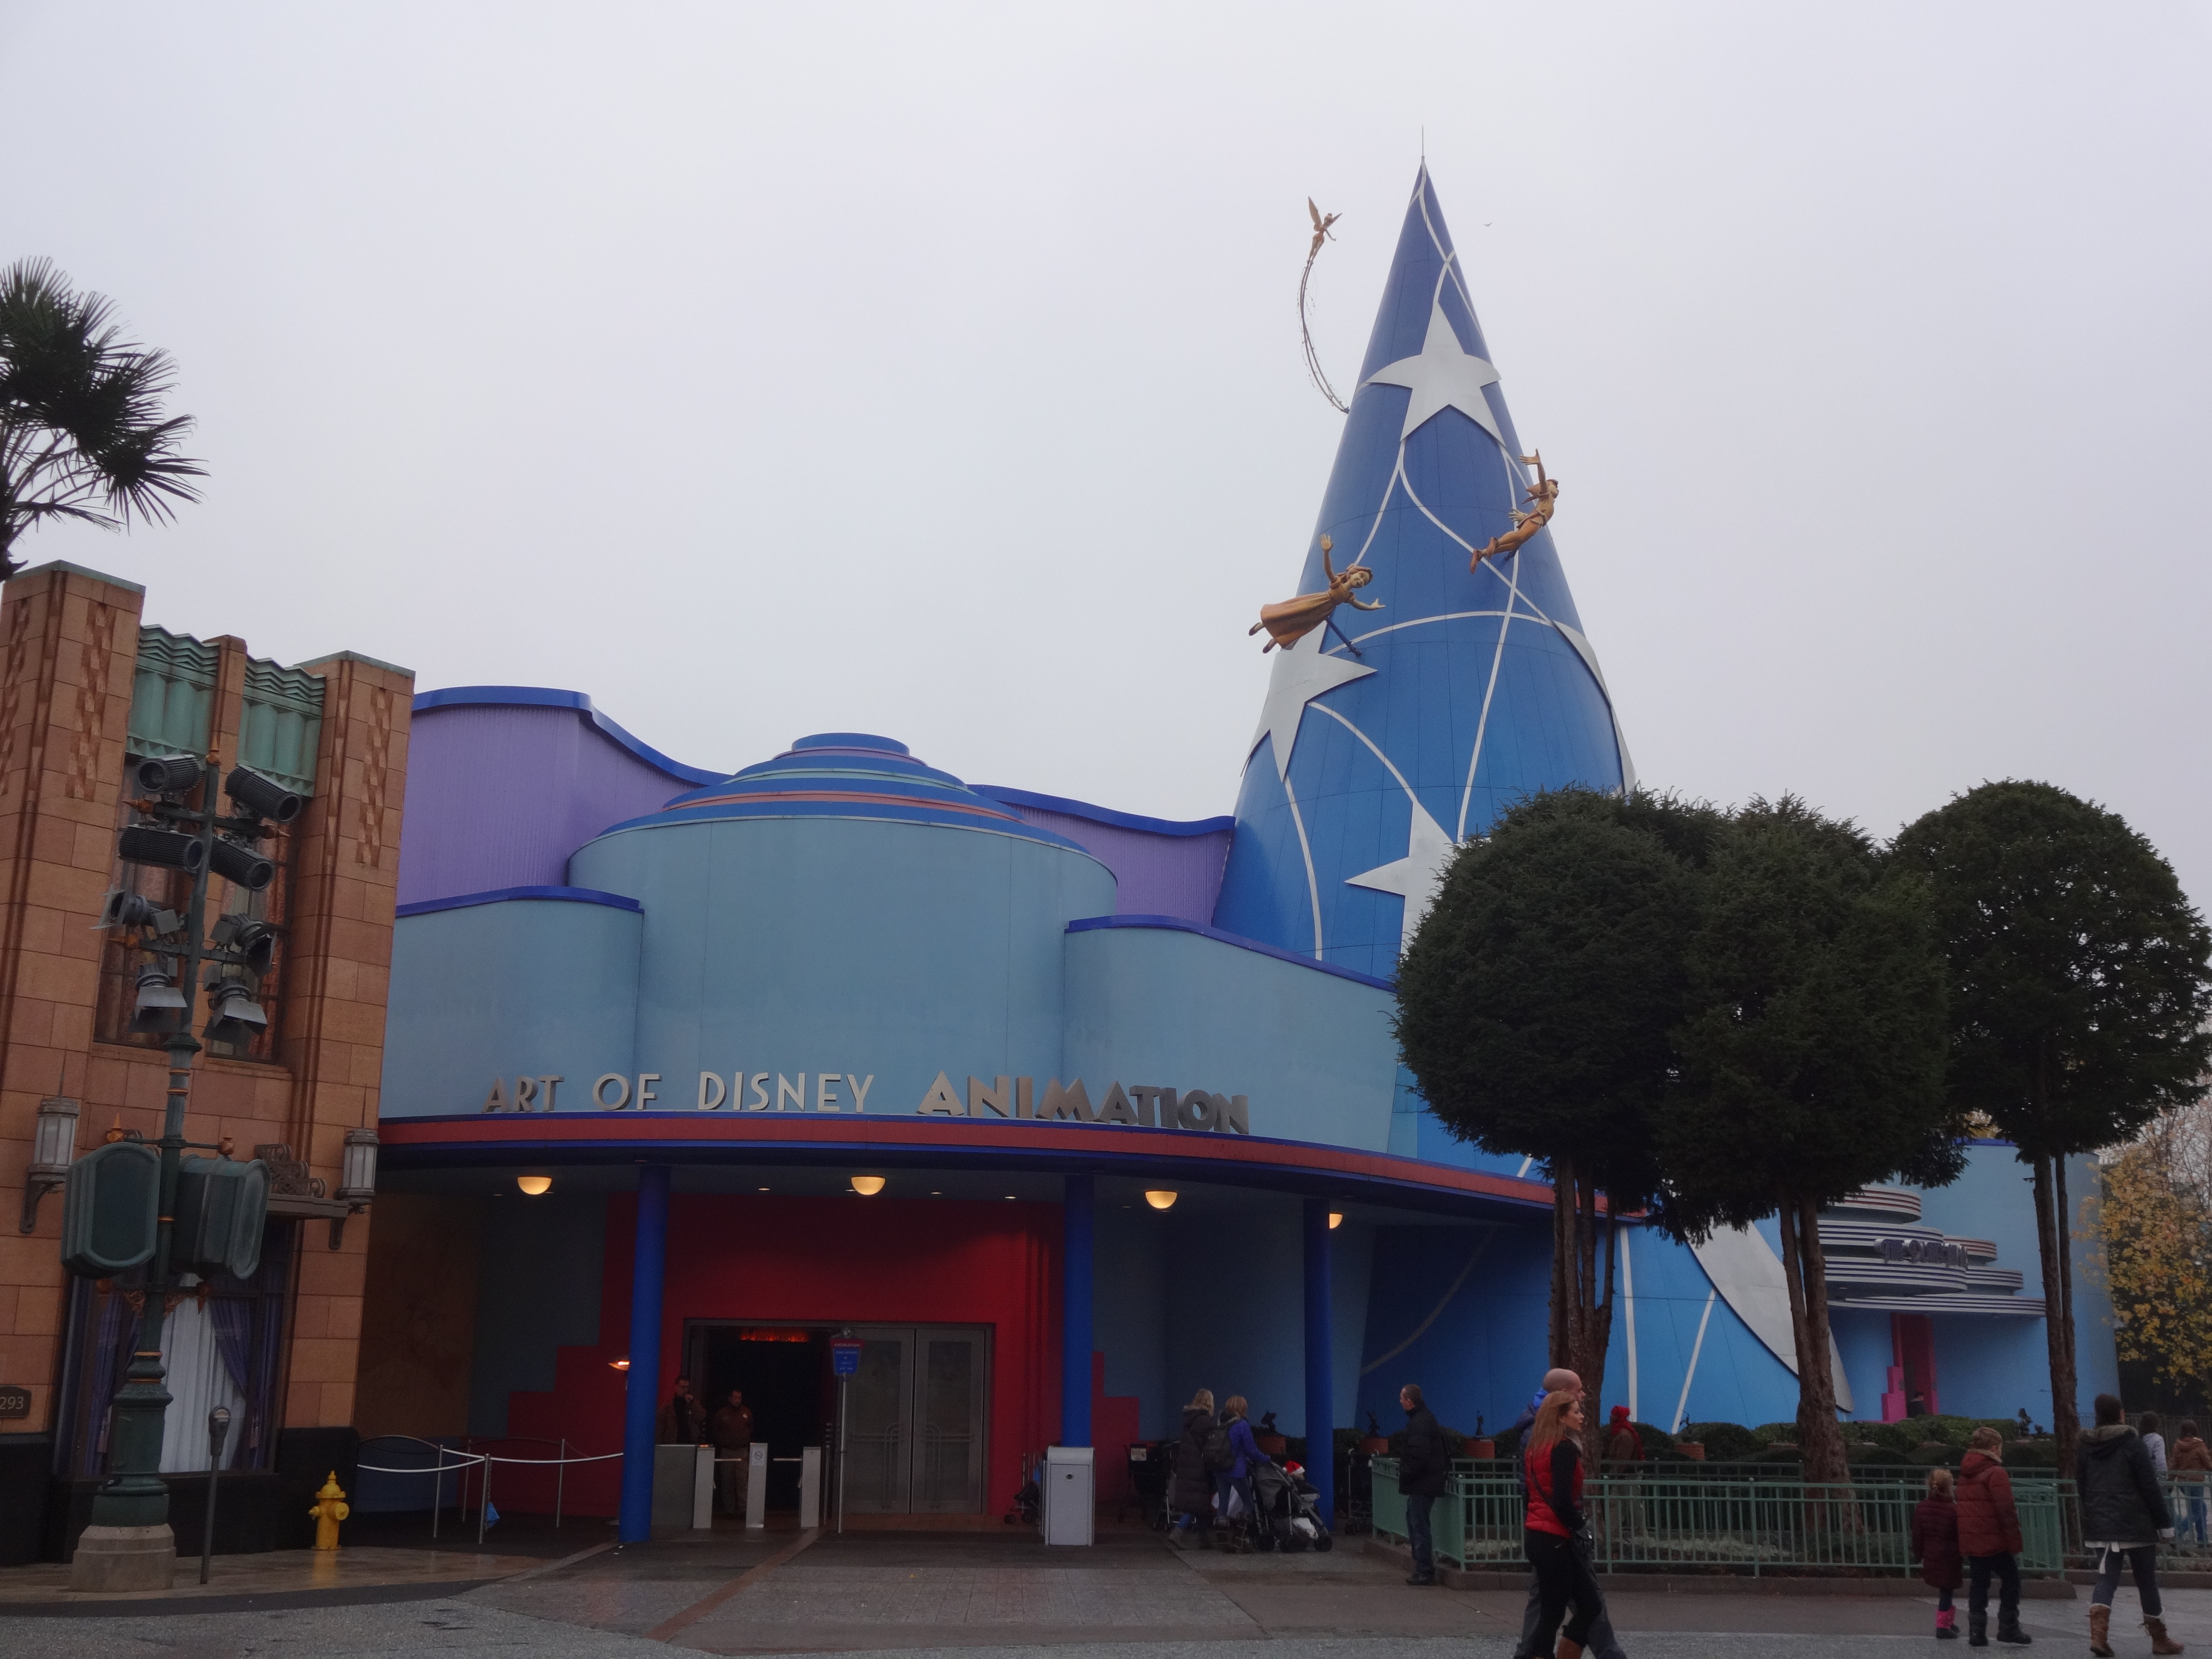 Building Entertainment: The films of the Walt Disney Studio. The